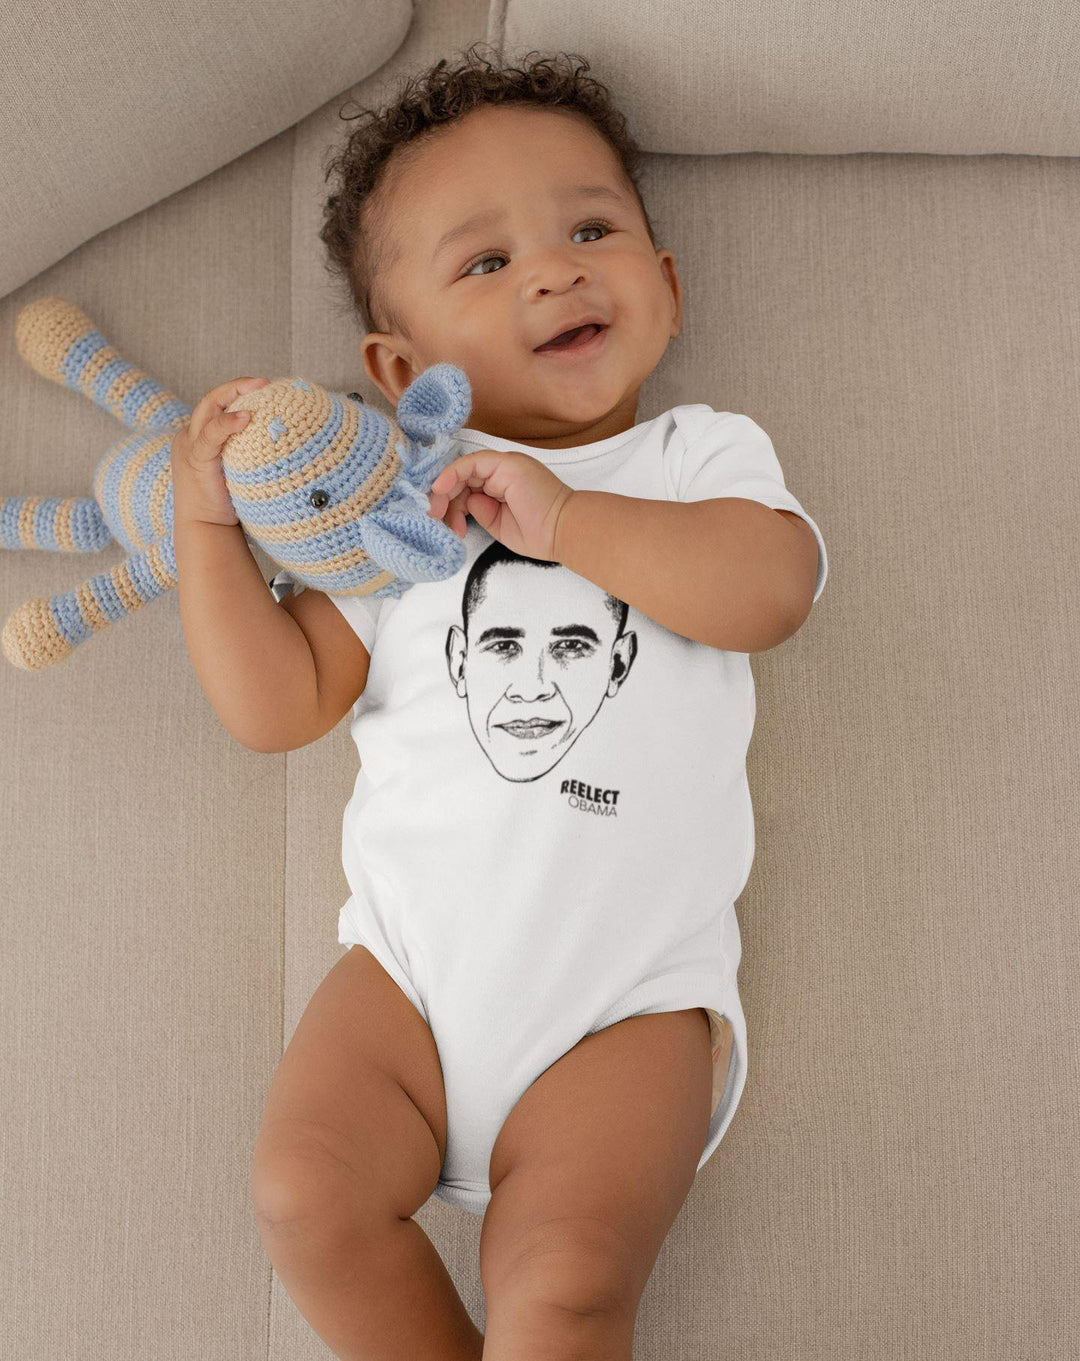 Hope Baby Onesie Baby Onesie Reelect Obama 